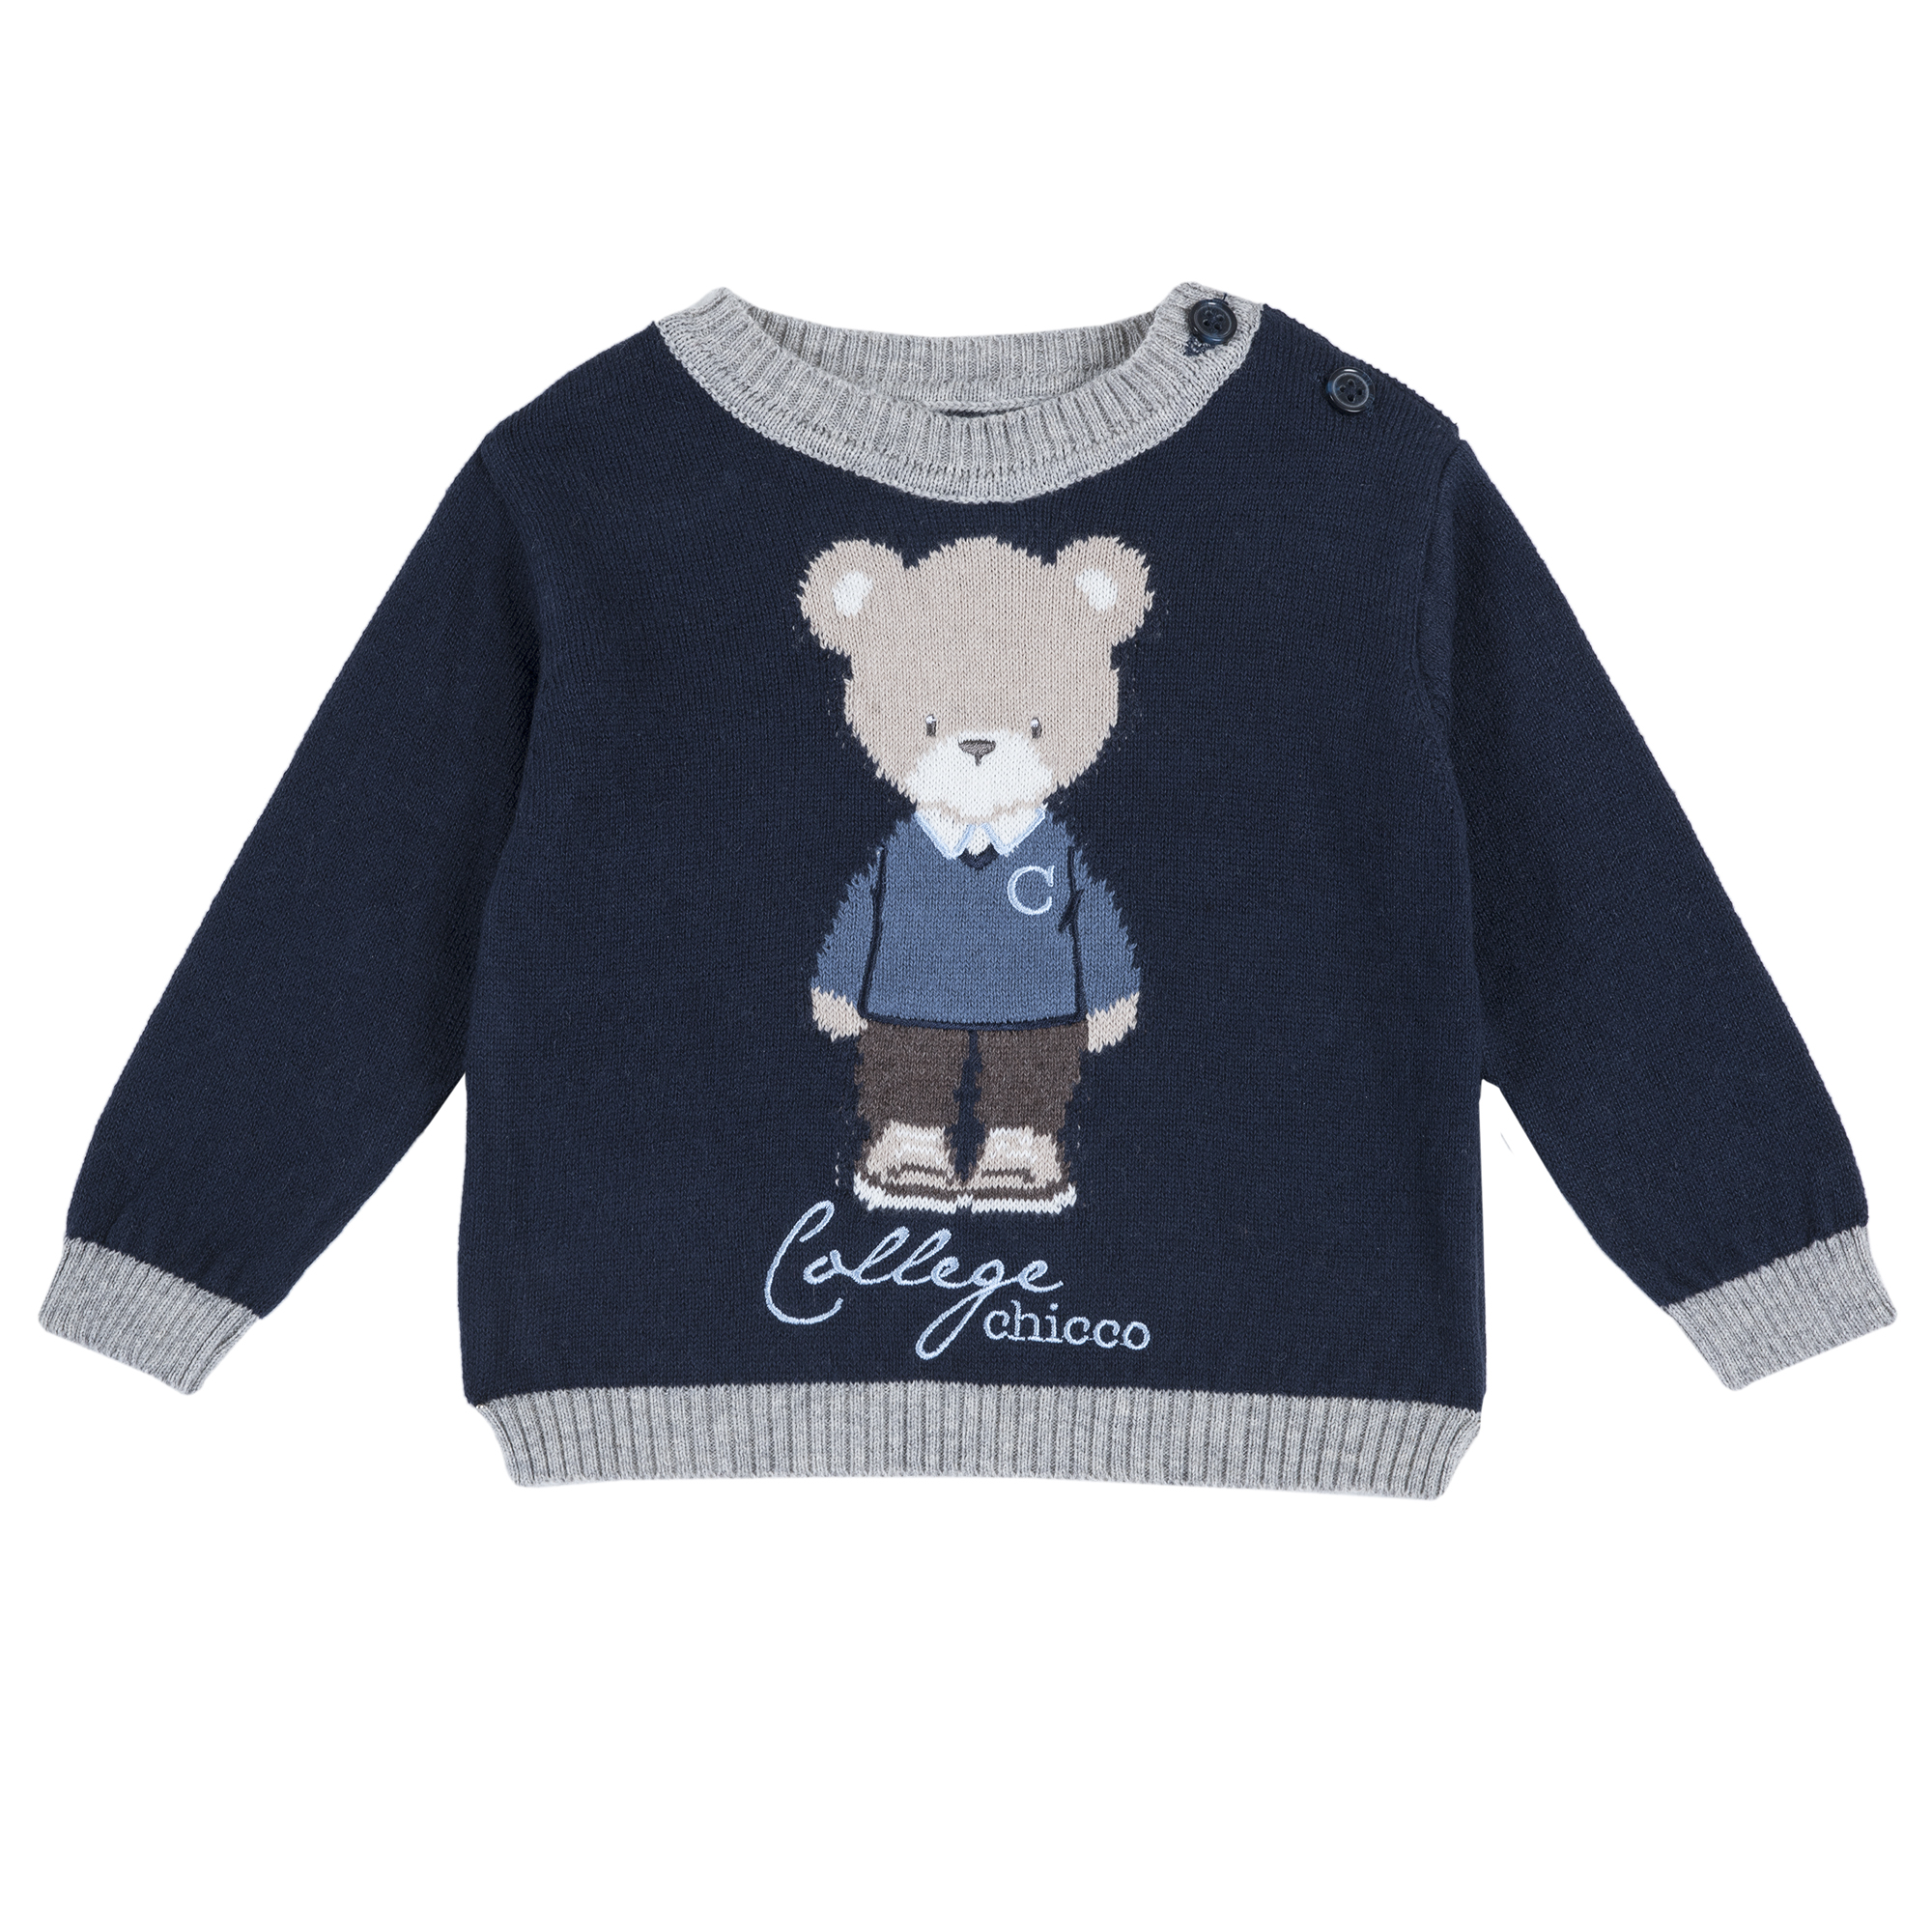 Pulover copii Chicco, tricotat, imprimeu ursulet, 69381 CHICCO